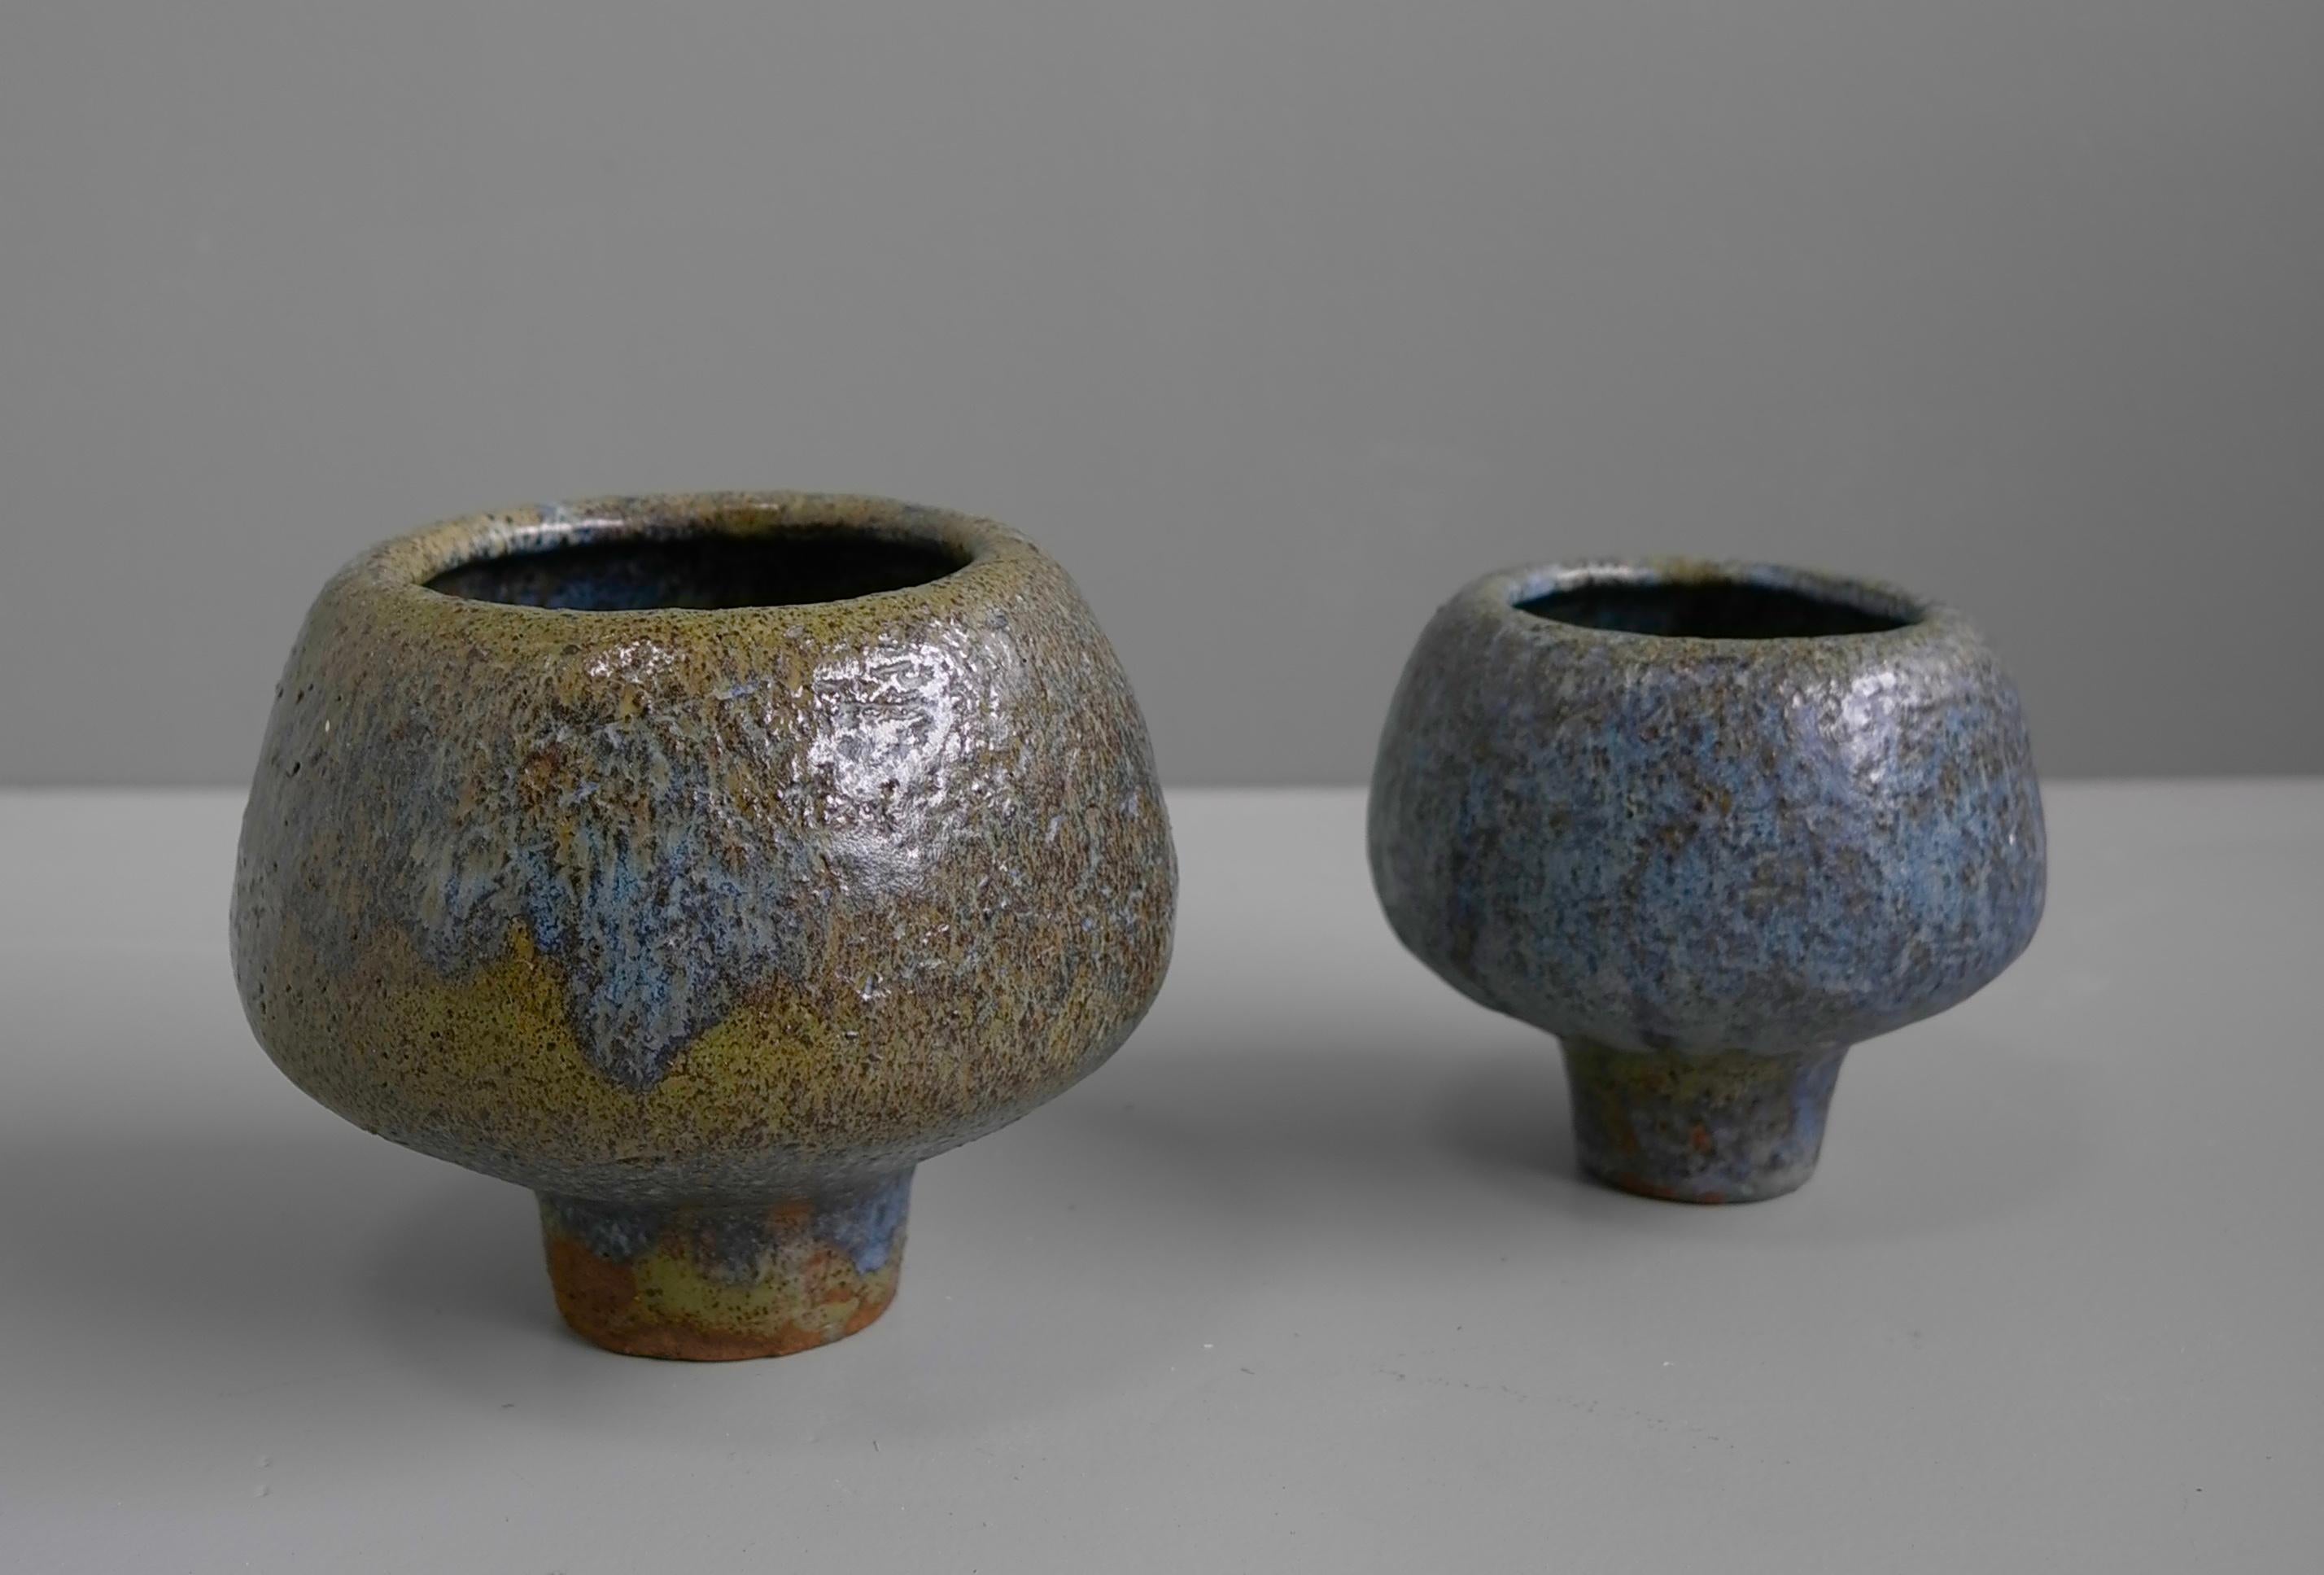 Pair of Mid-Century Modern Danish Ceramic Glazed Planters
Largest: 19cm diameter x 16cm Height
smallest: 15cm diameter x 14cmHeight 